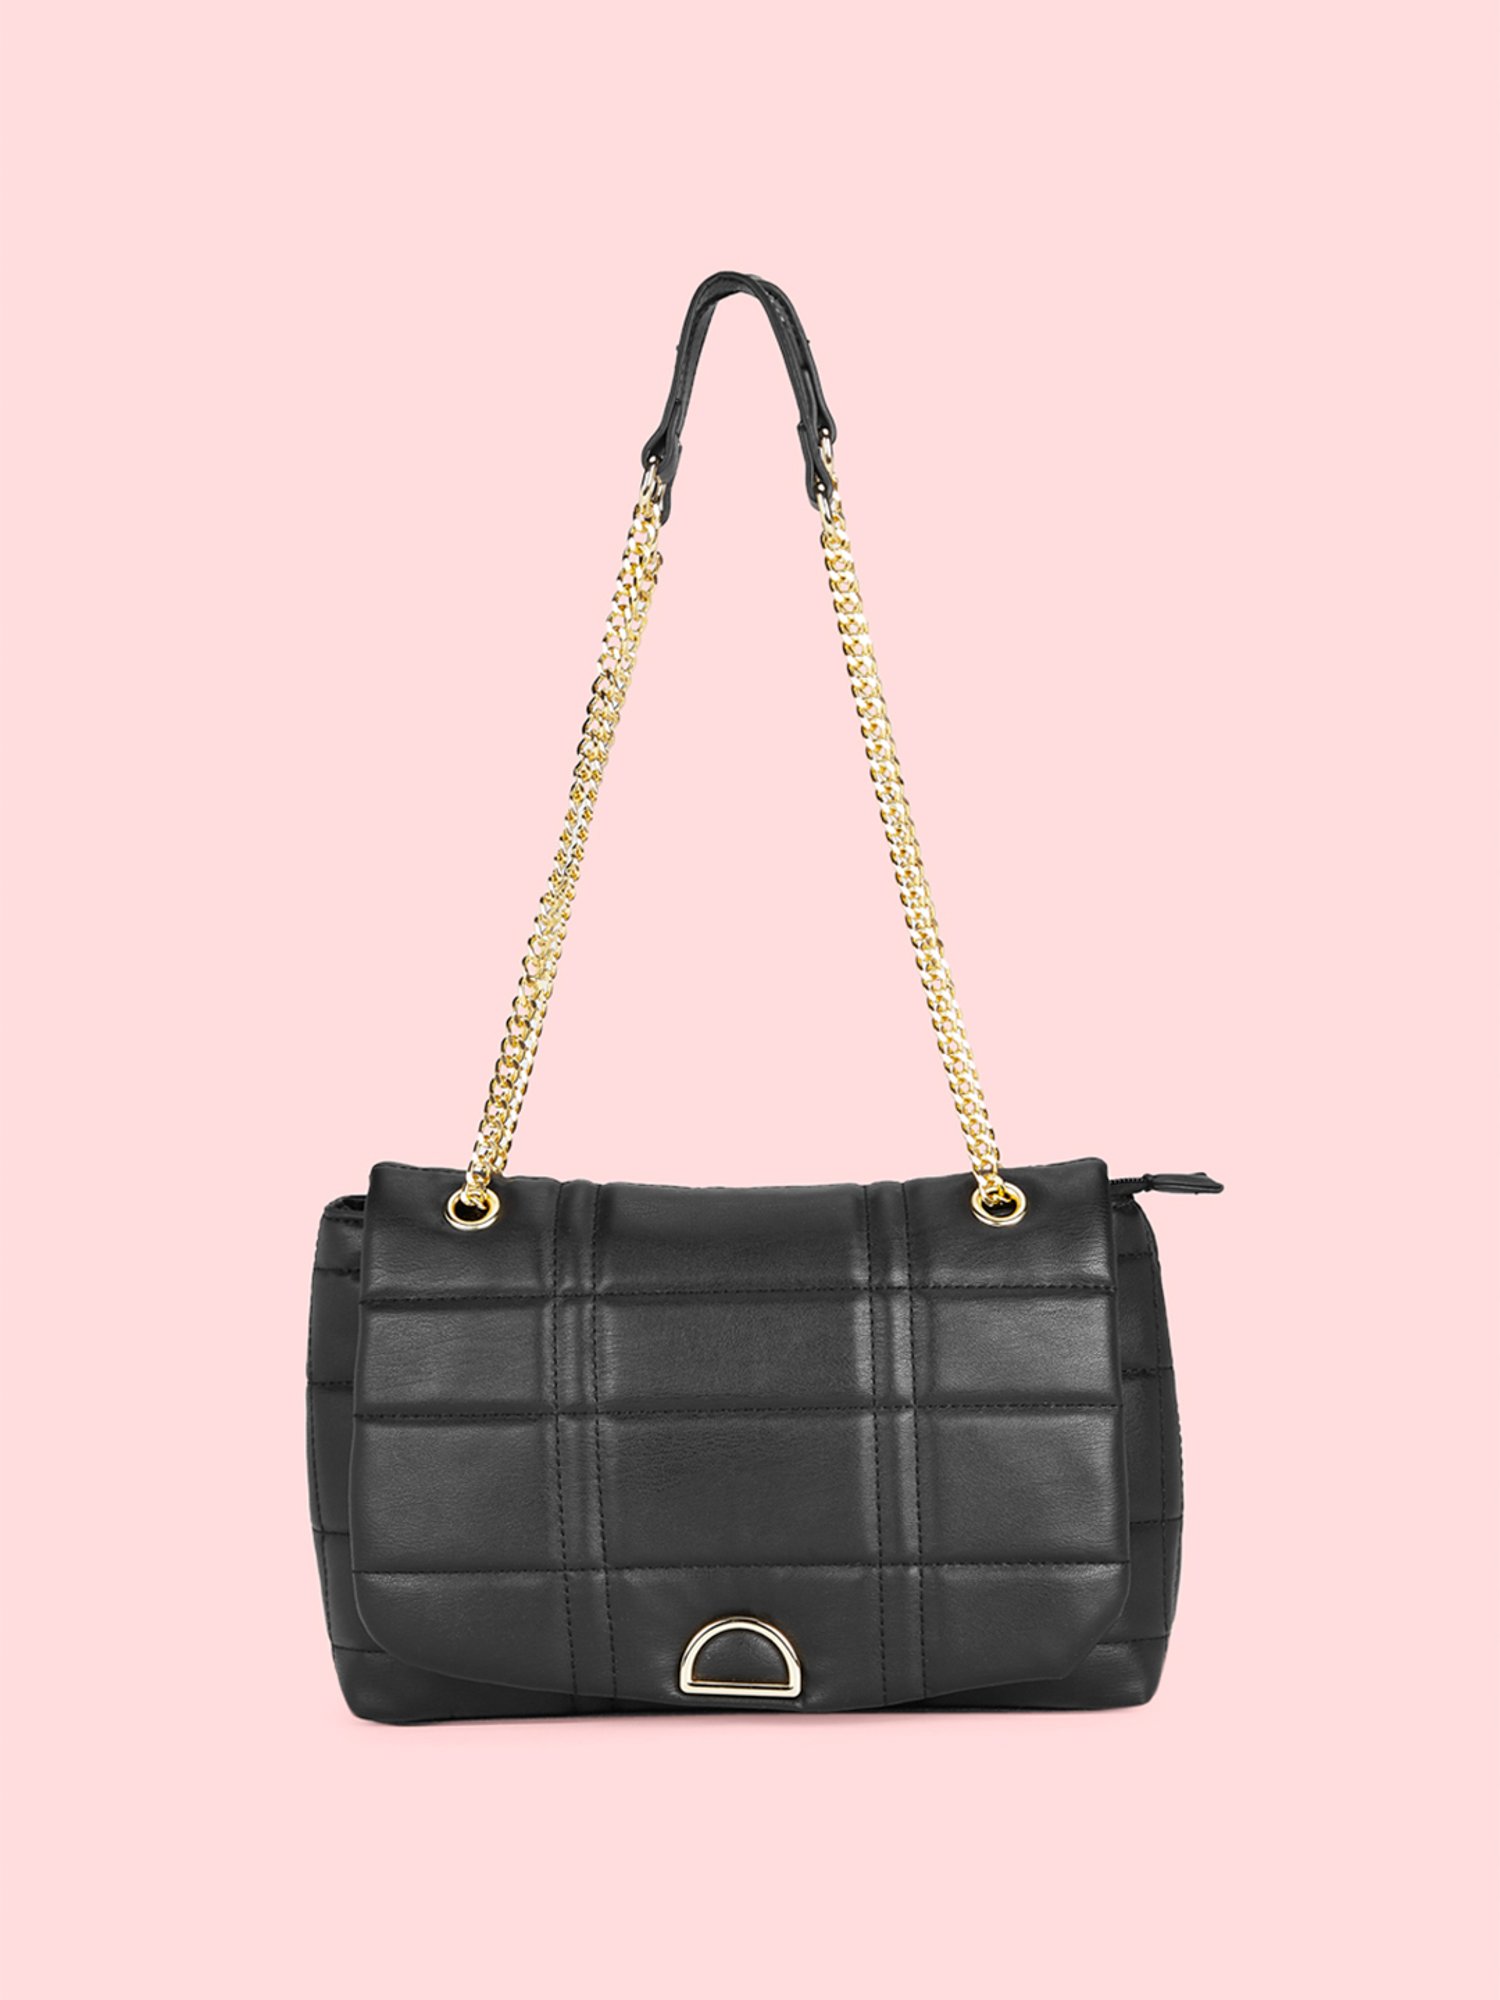 Women's Gold Color Chain Black Shoulder Bag